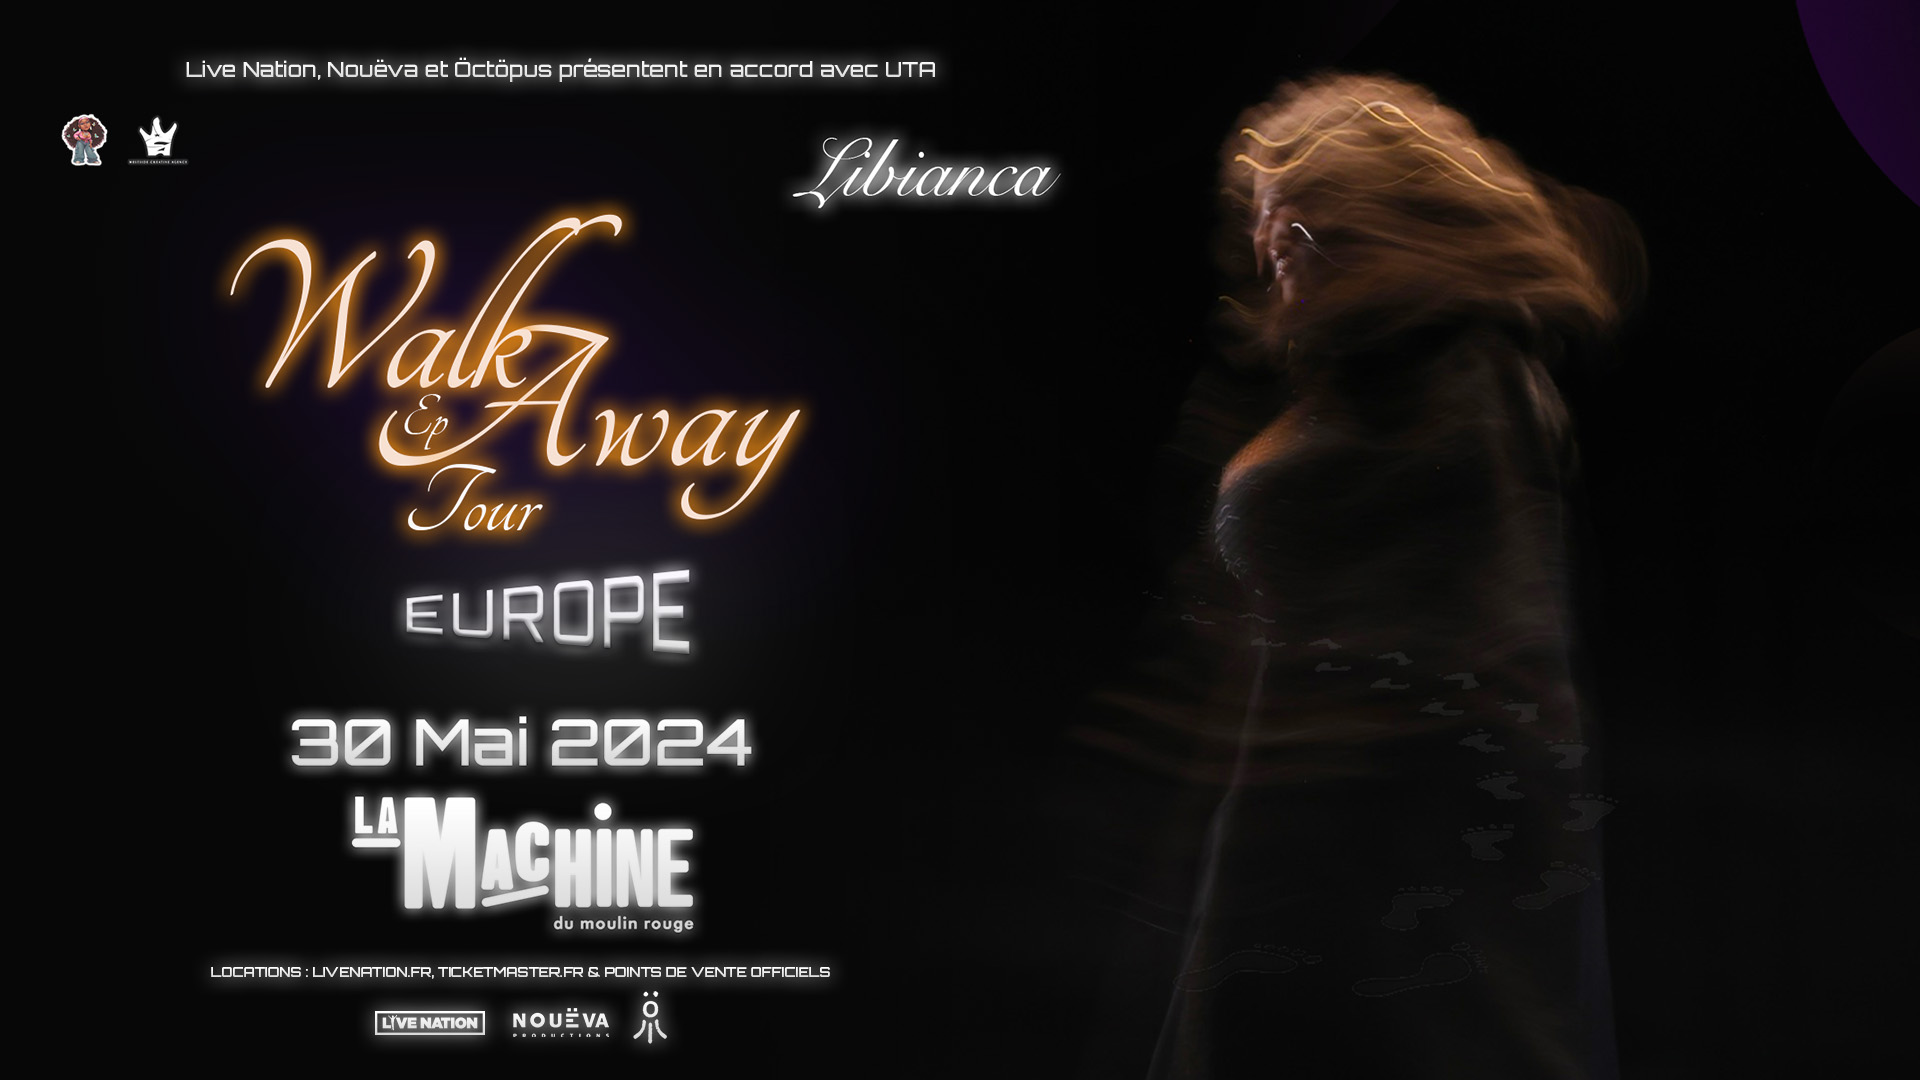 Libianca en La Machine du Moulin Rouge Tickets